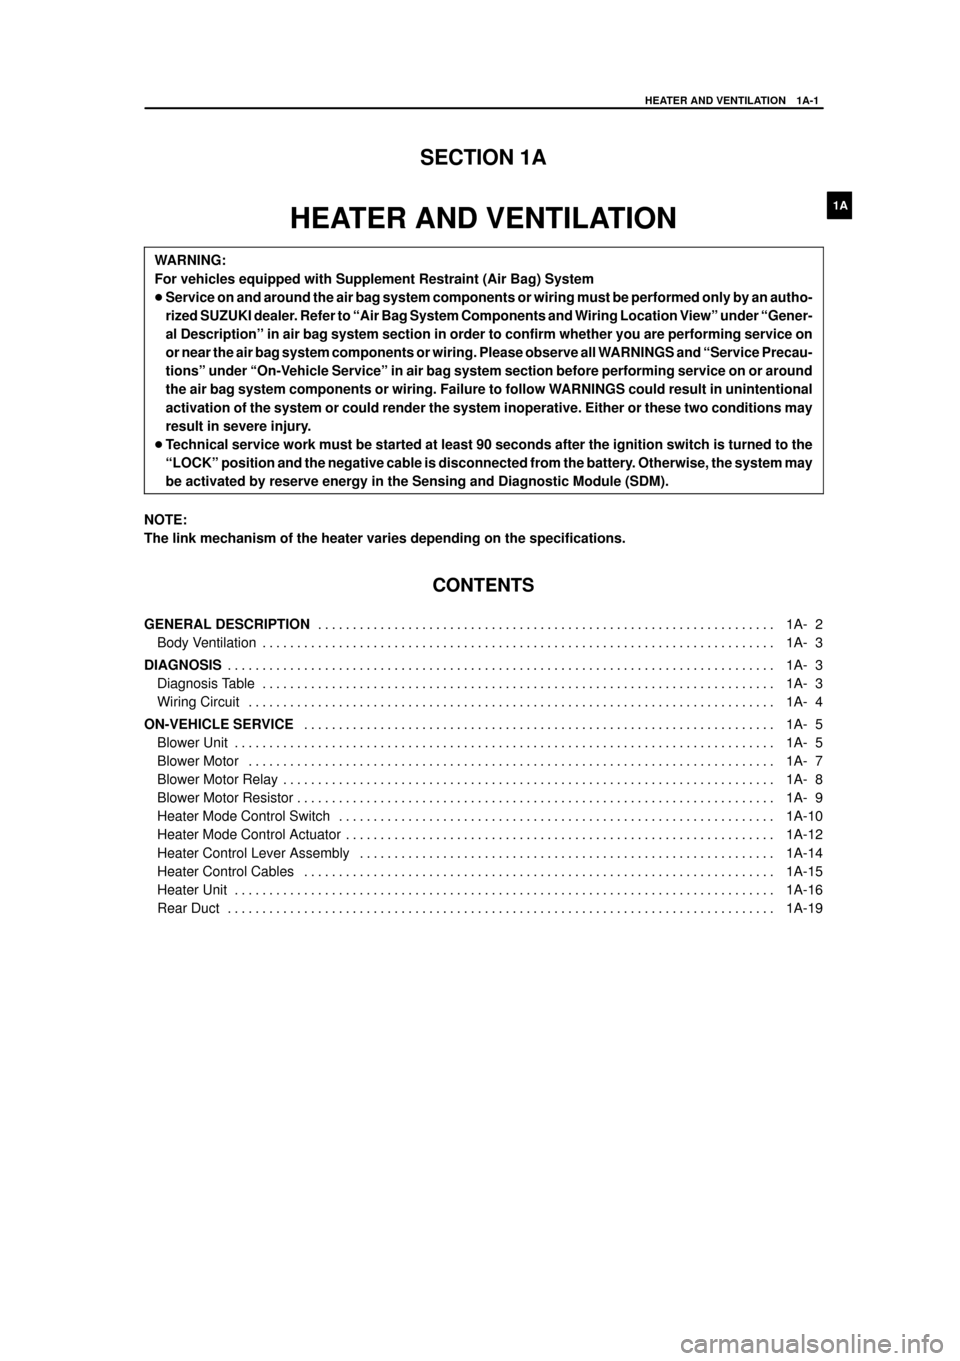 SUZUKI GRAND VITARA 1998 2.G Service Workshop Manual YH4
GRAND
VITARA
1A
HEATER AND VENTILATION 1A-1
SECTION 1A
HEATER AND VENTILATION
WARNING:
For vehicles equipped with Supplement Restraint (Air Bag) System
Service on and around the air bag system co